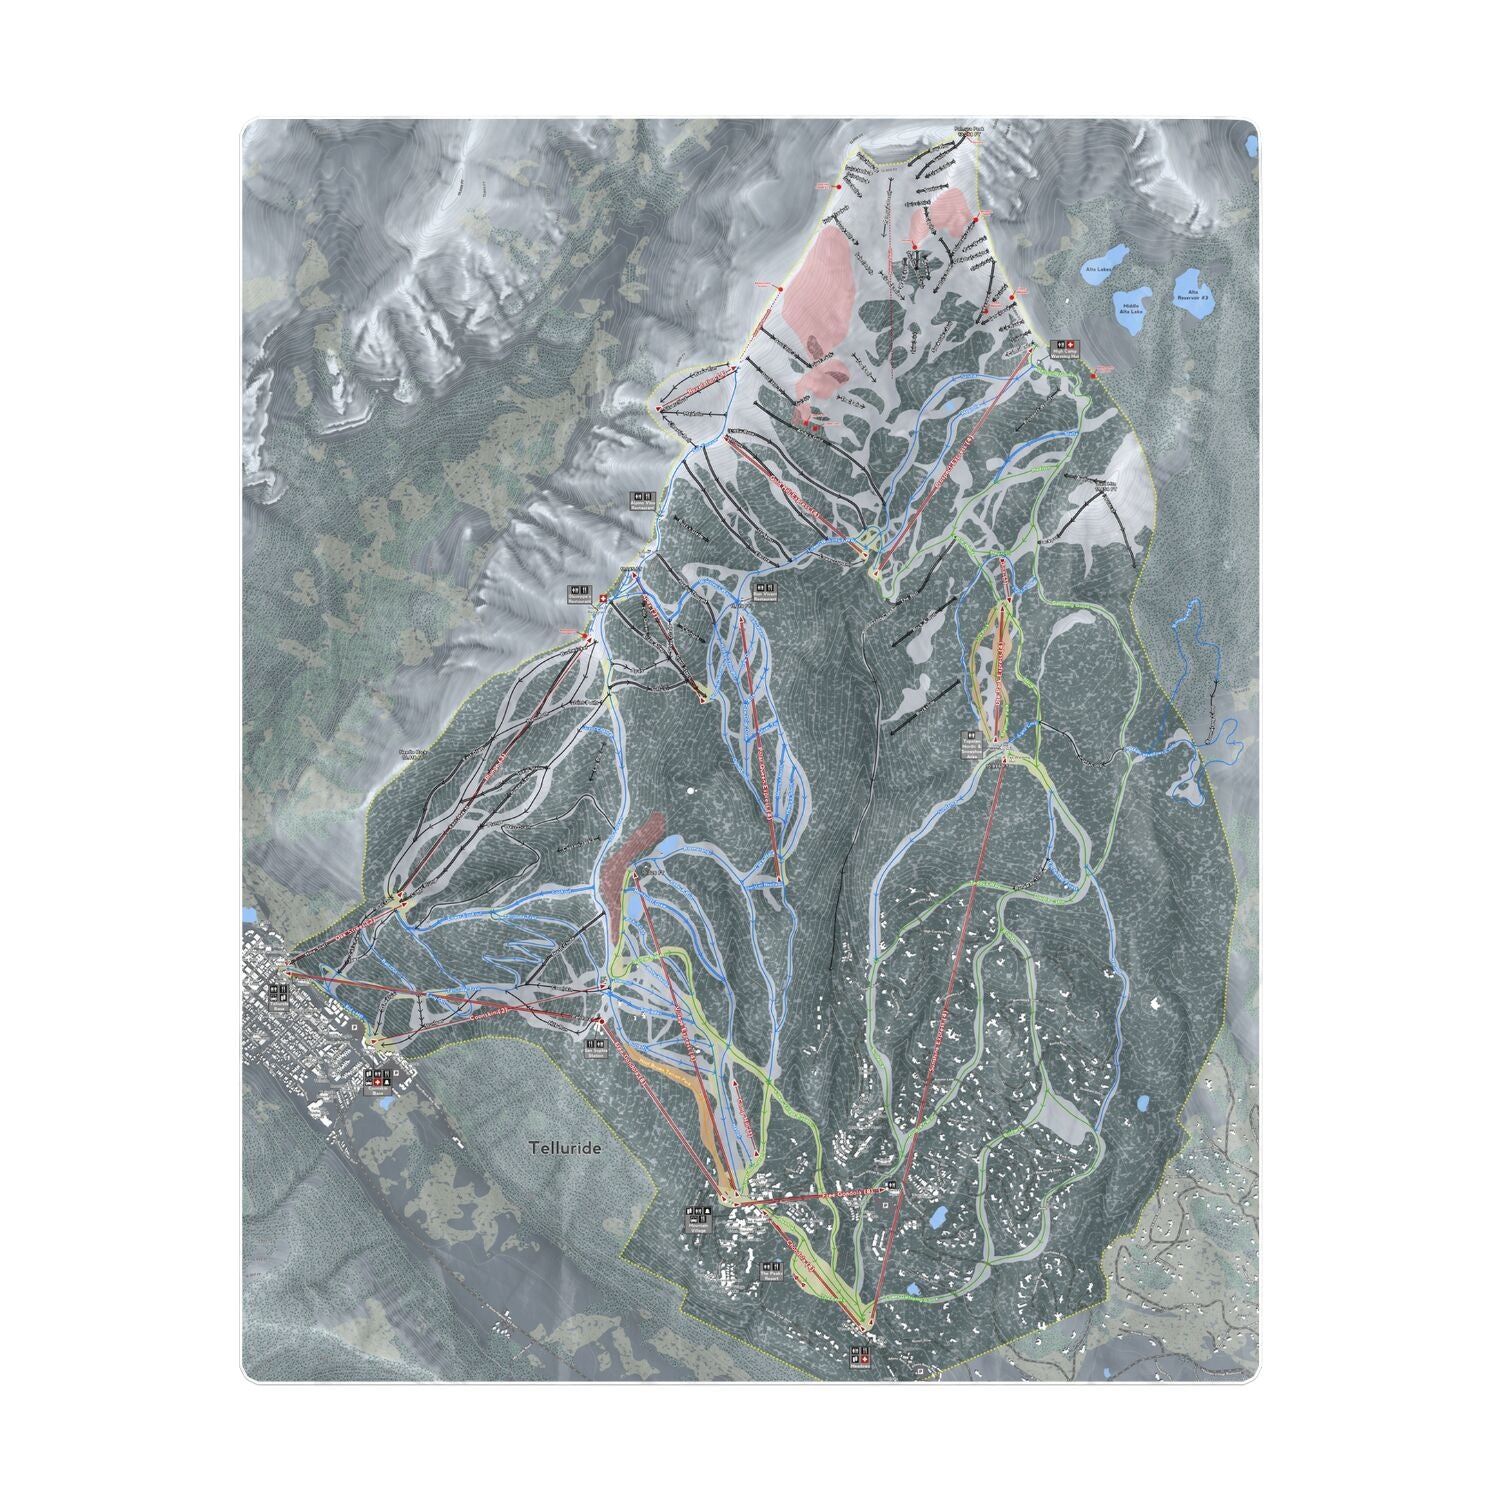 Telluride, Colorado Ski Resort Map Printed Beach Towel - Powderaddicts